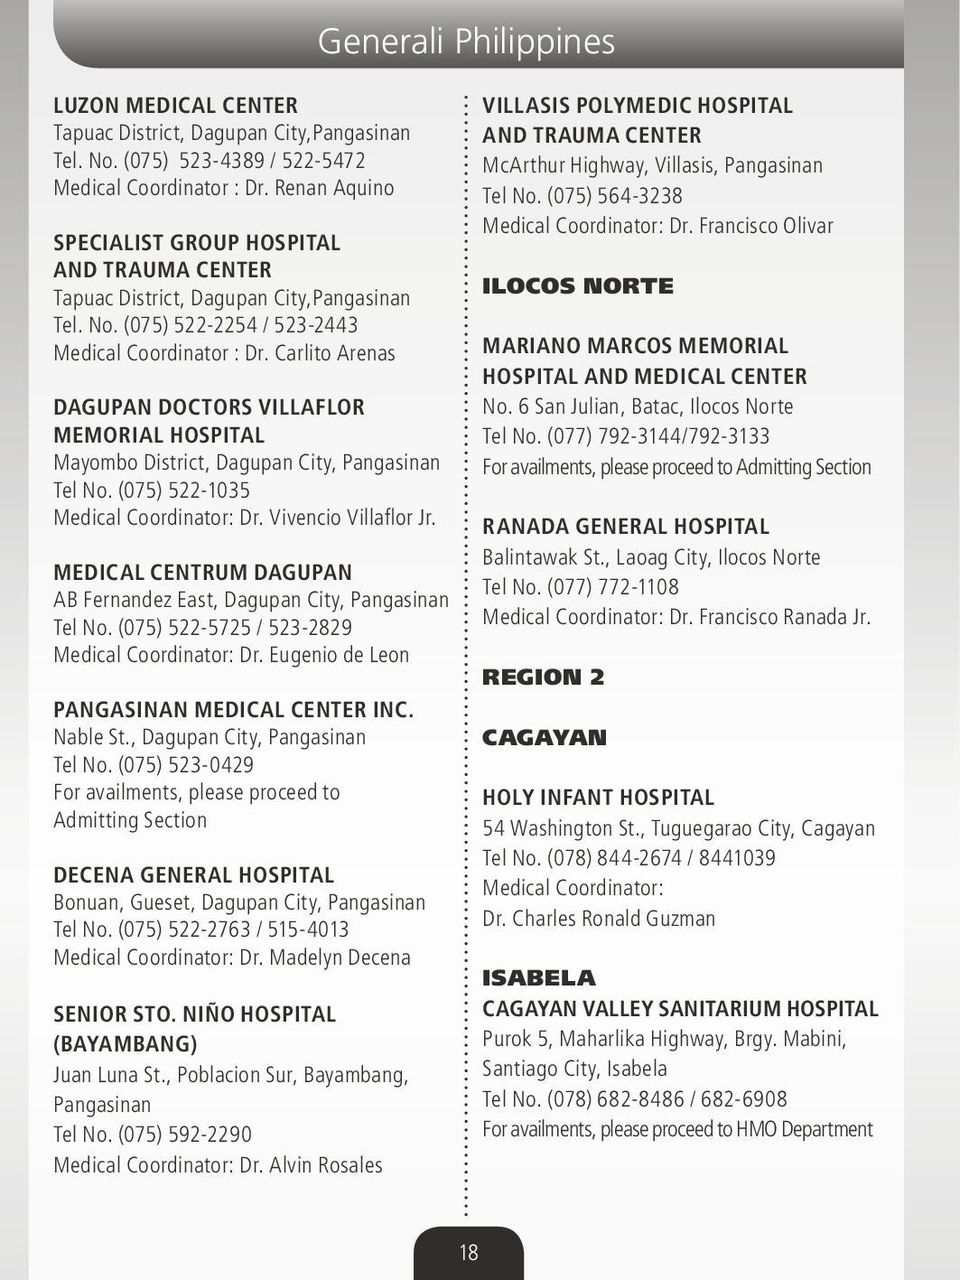 Carlito Arenas DAGUPAN DOCTORS VILLAFLOR MEMORIAL HOSPITAL Mayombo District, Dagupan City, Pangasinan Tel No. (075) 522-1035 Medical Coordinator: Dr. Vivencio Villaflor Jr.